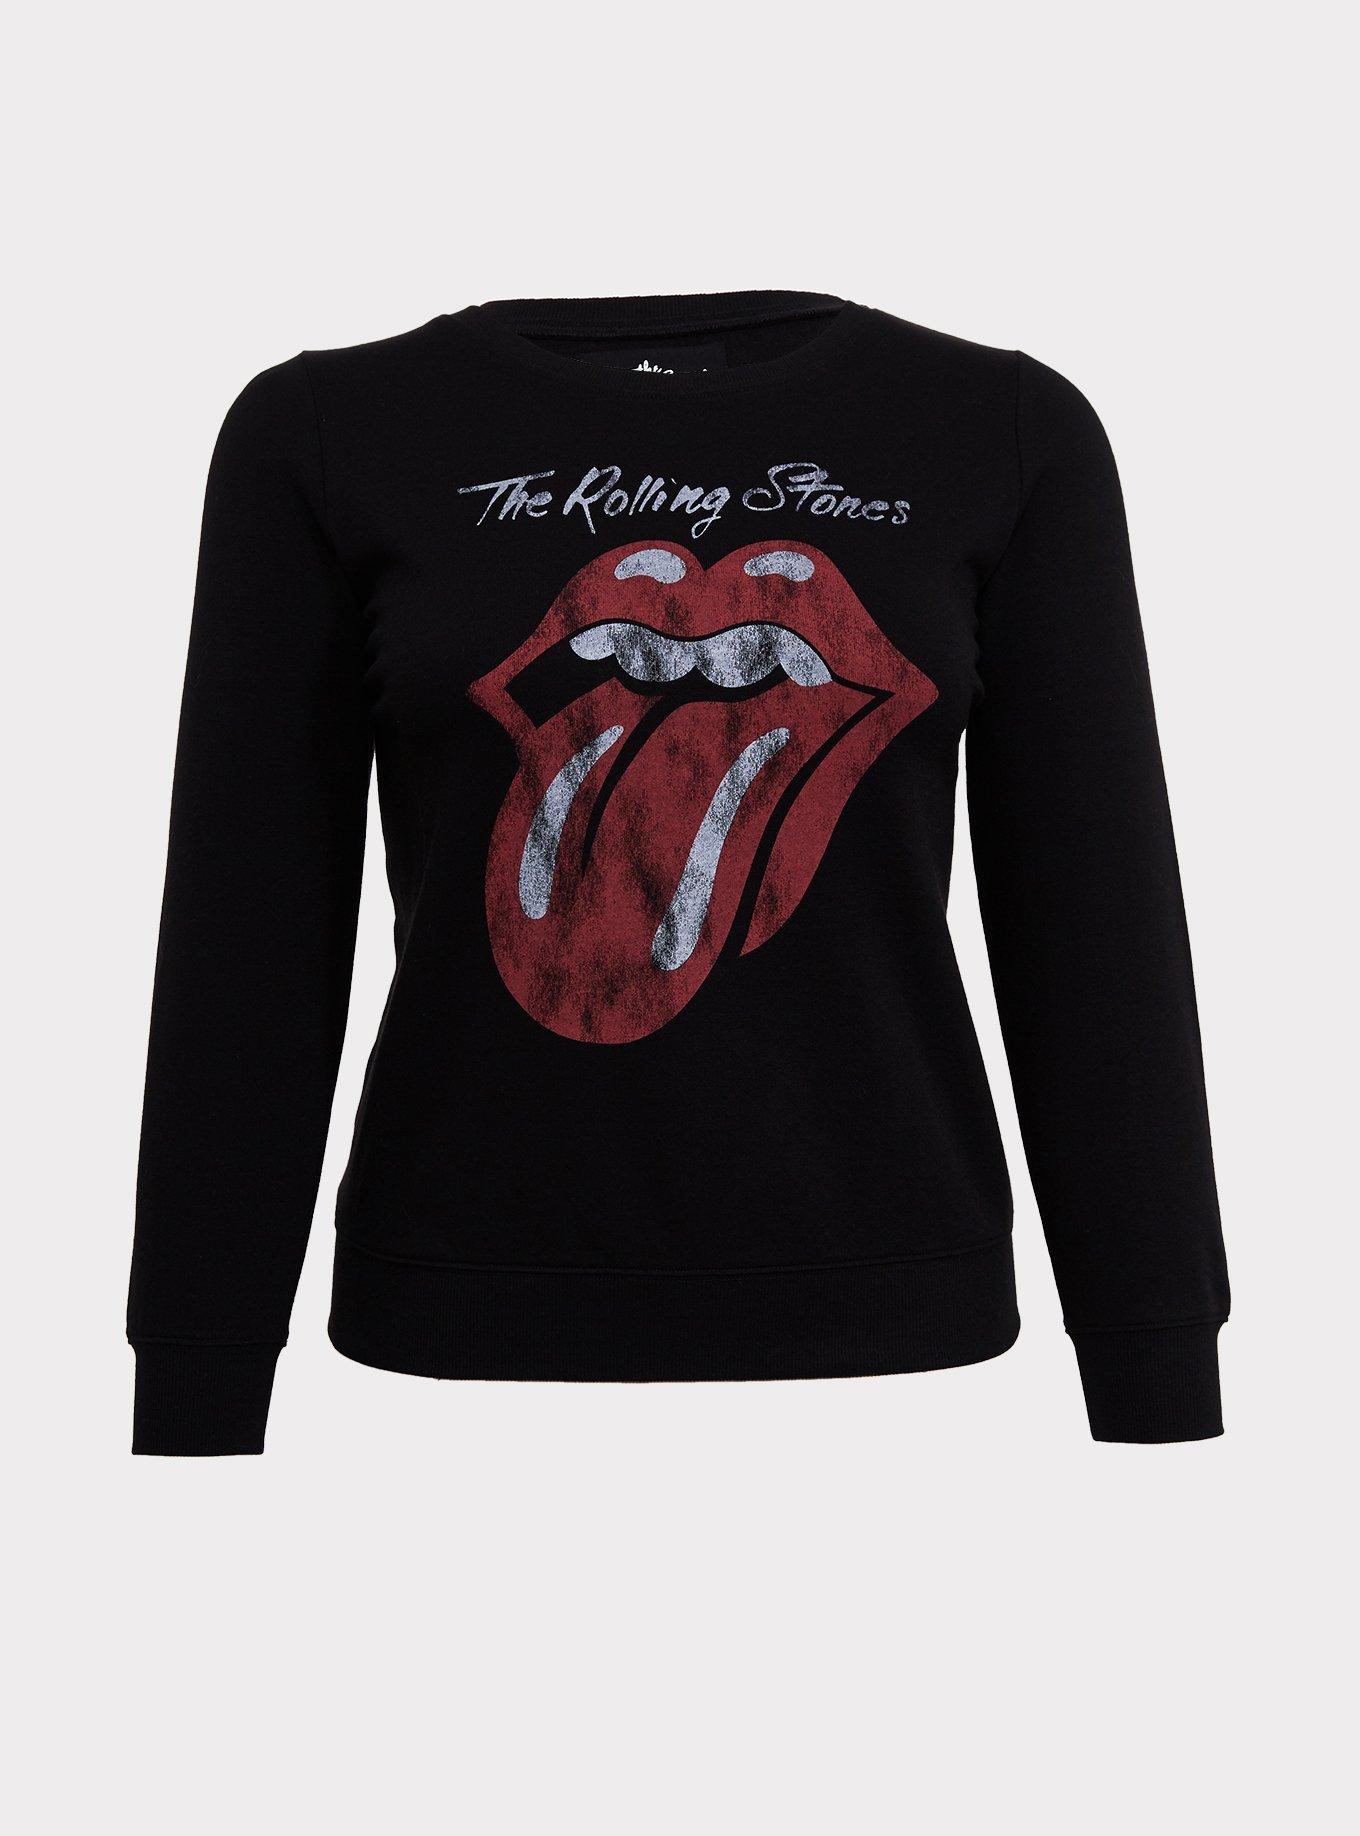 Plus Size - Rolling Stones Black Crew Sweatshirt - Torrid